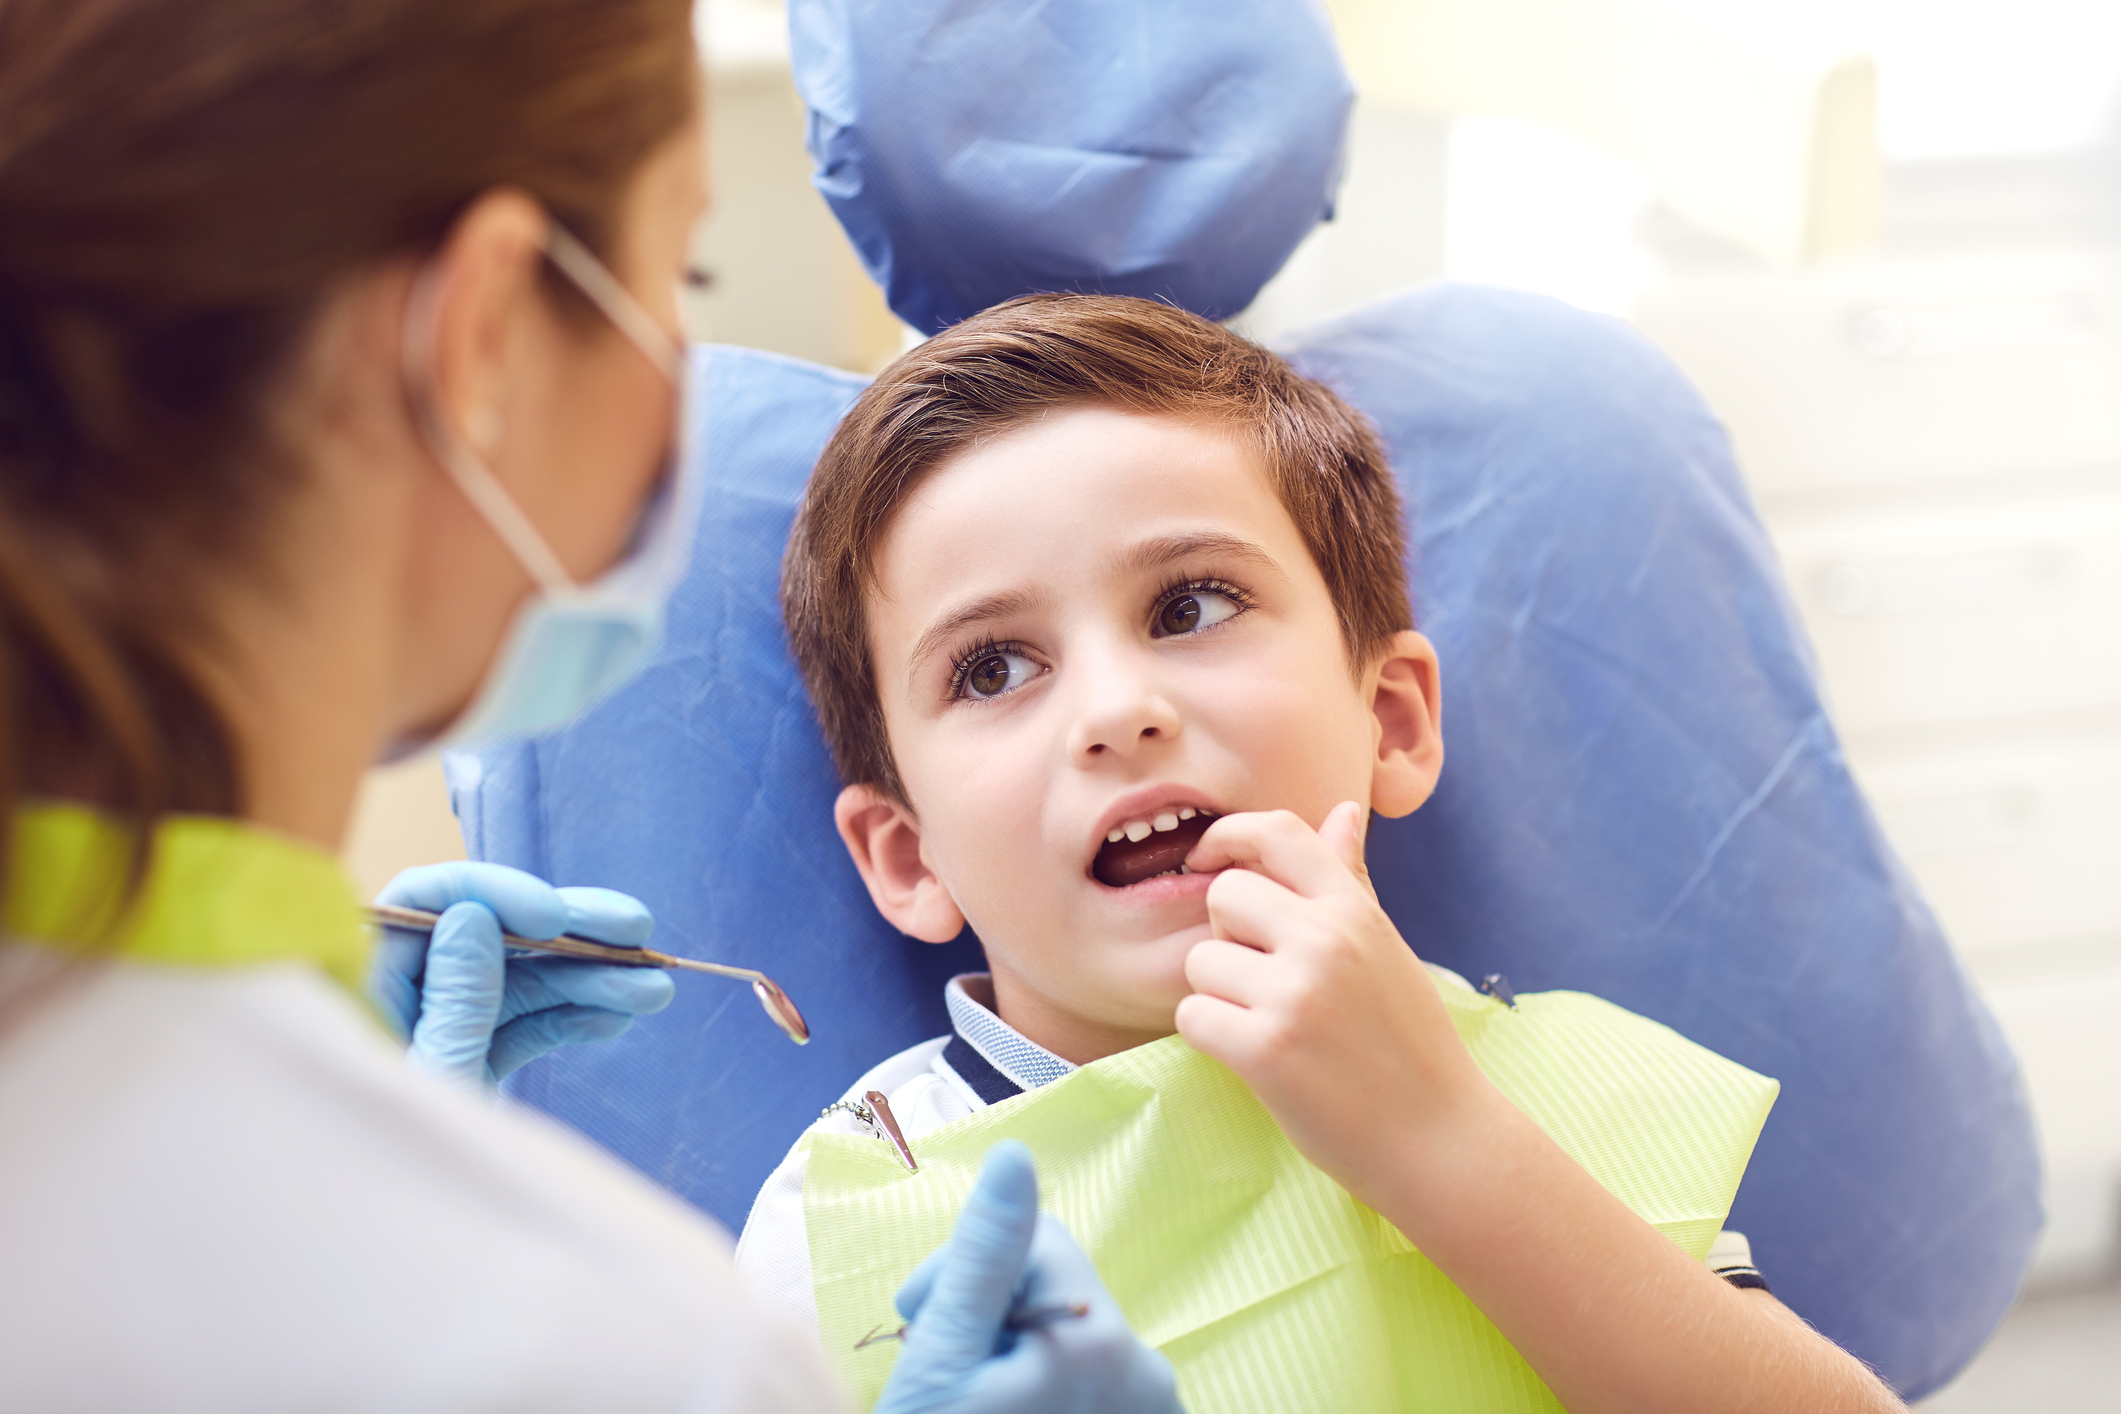 Dentist Pass: Περισσότερες από 129.000 οι αιτήσεις – Πώς μπορείτε να πάρετε voucher ακόμη και σήμερα